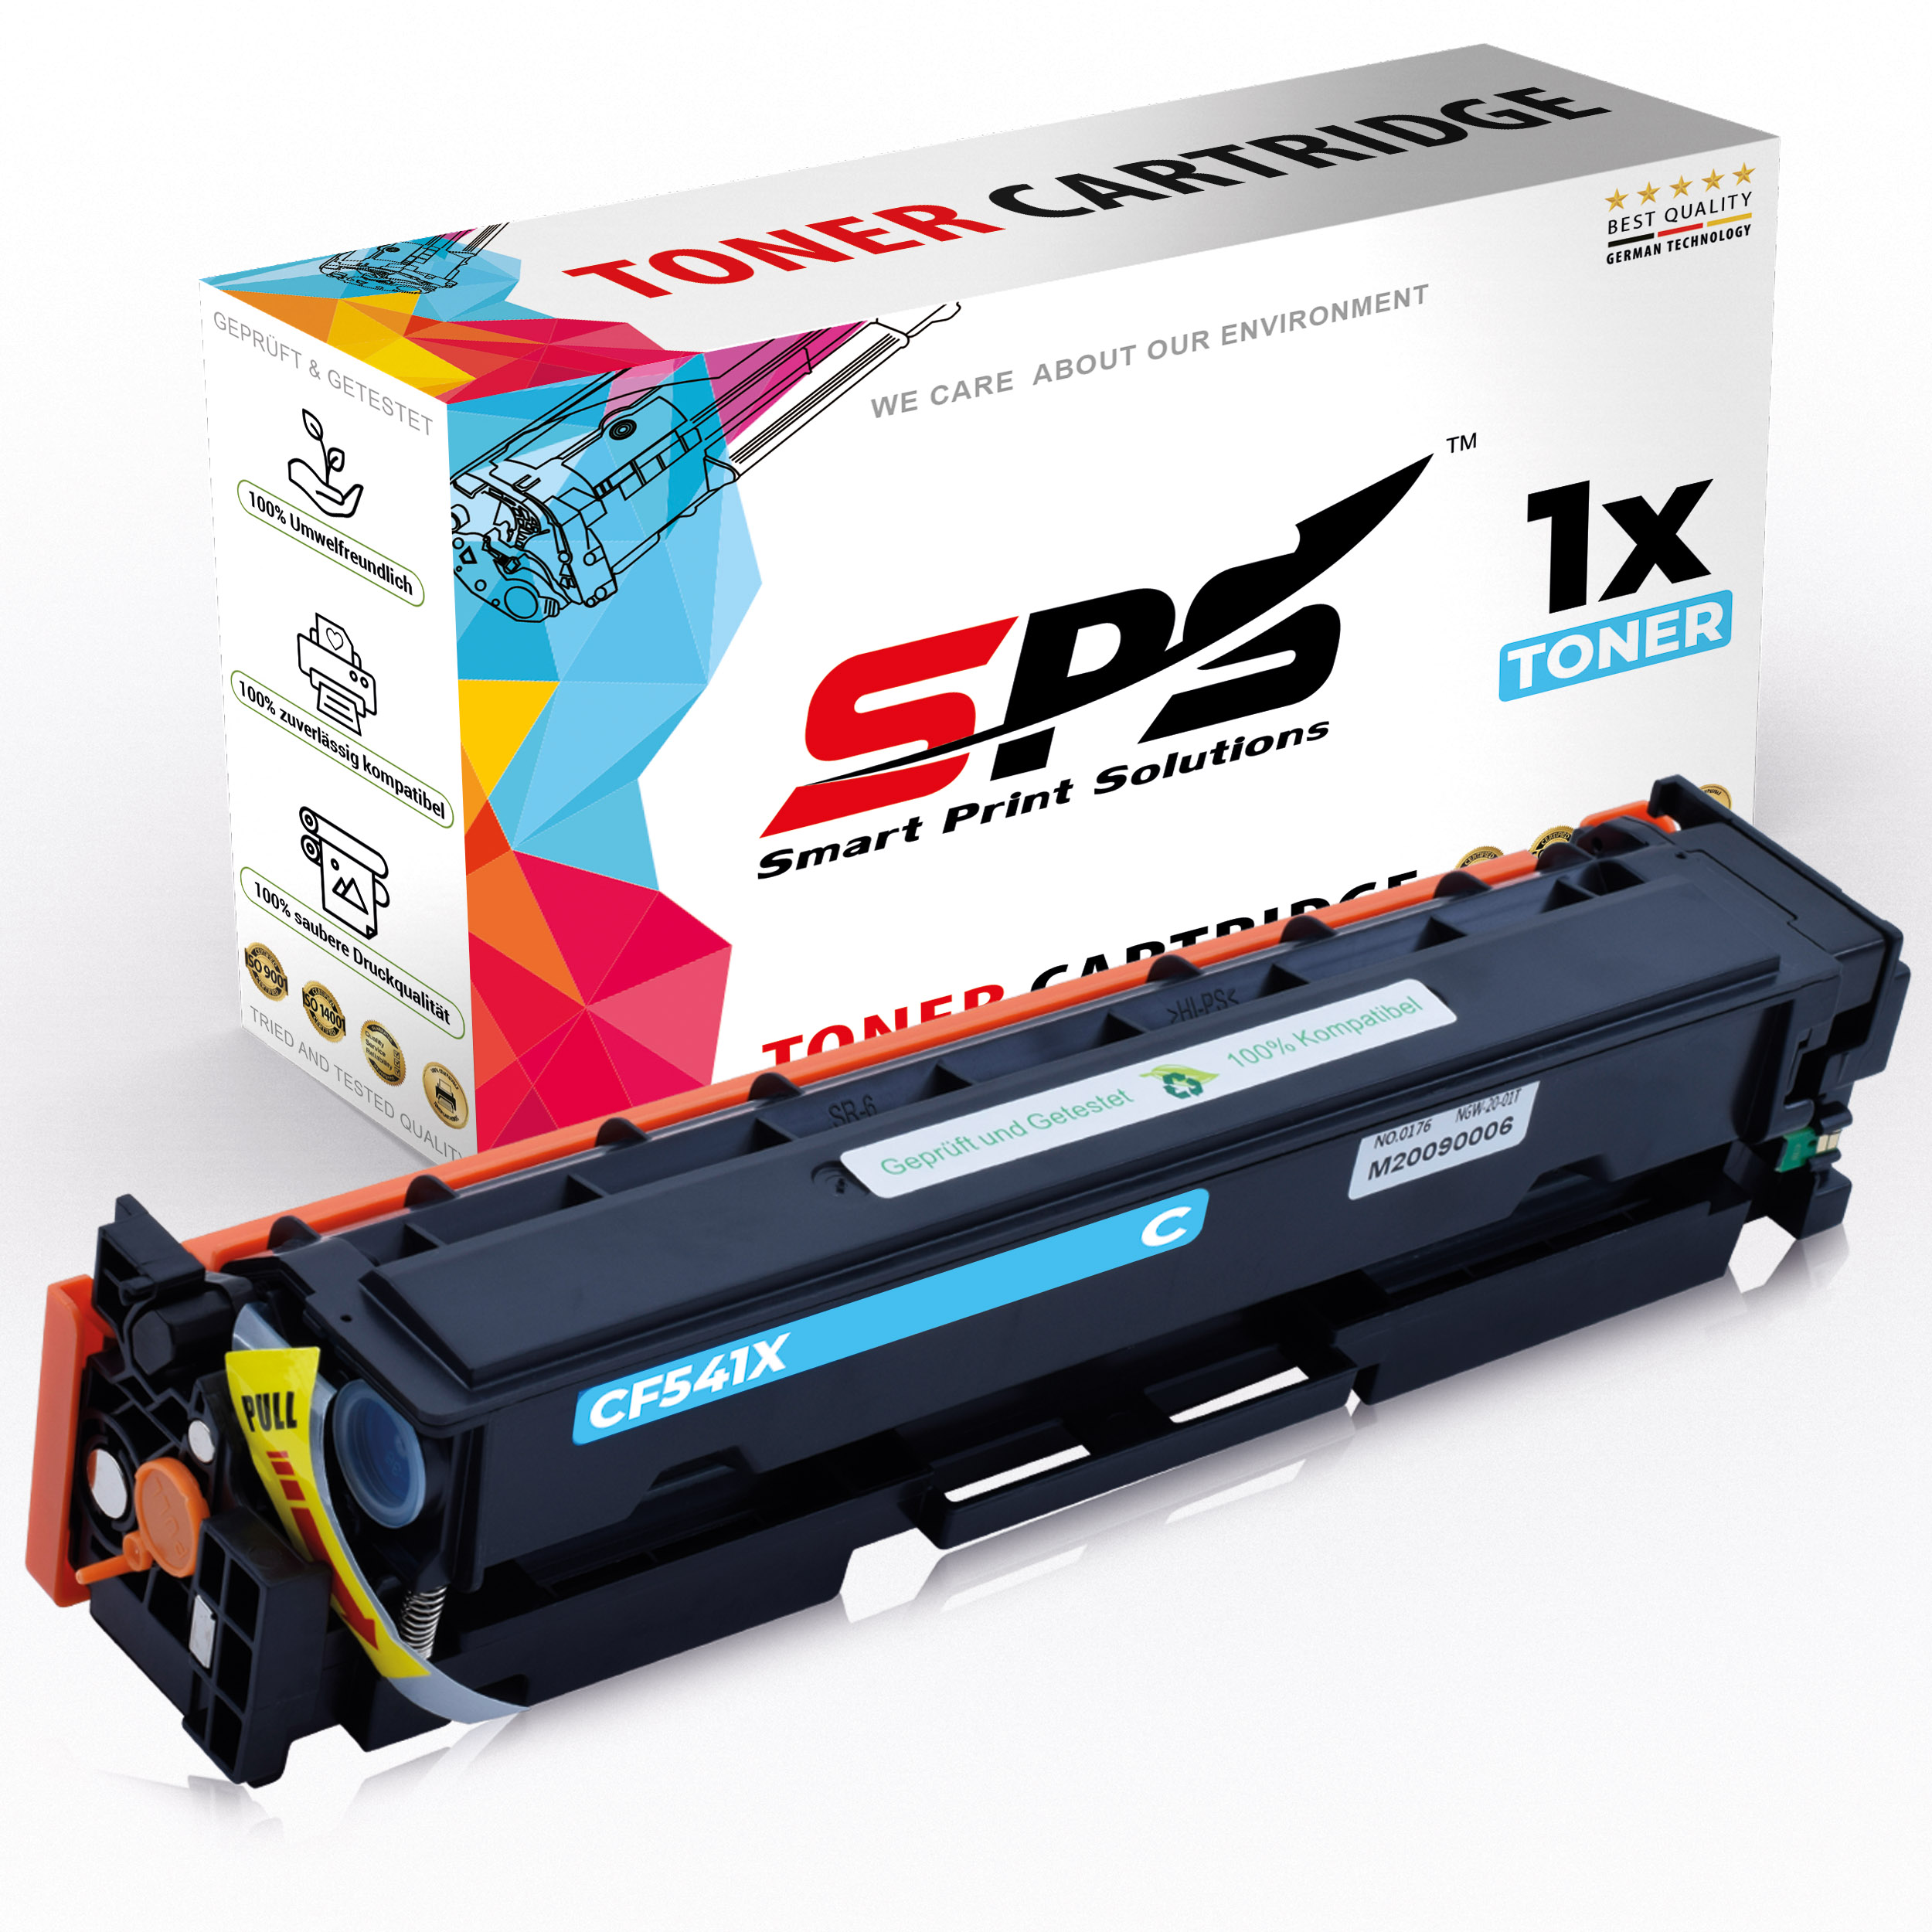 S-16303 M280NW) SPS / Color CF541X MFP (203X Pro Cyan Toner Laserjet